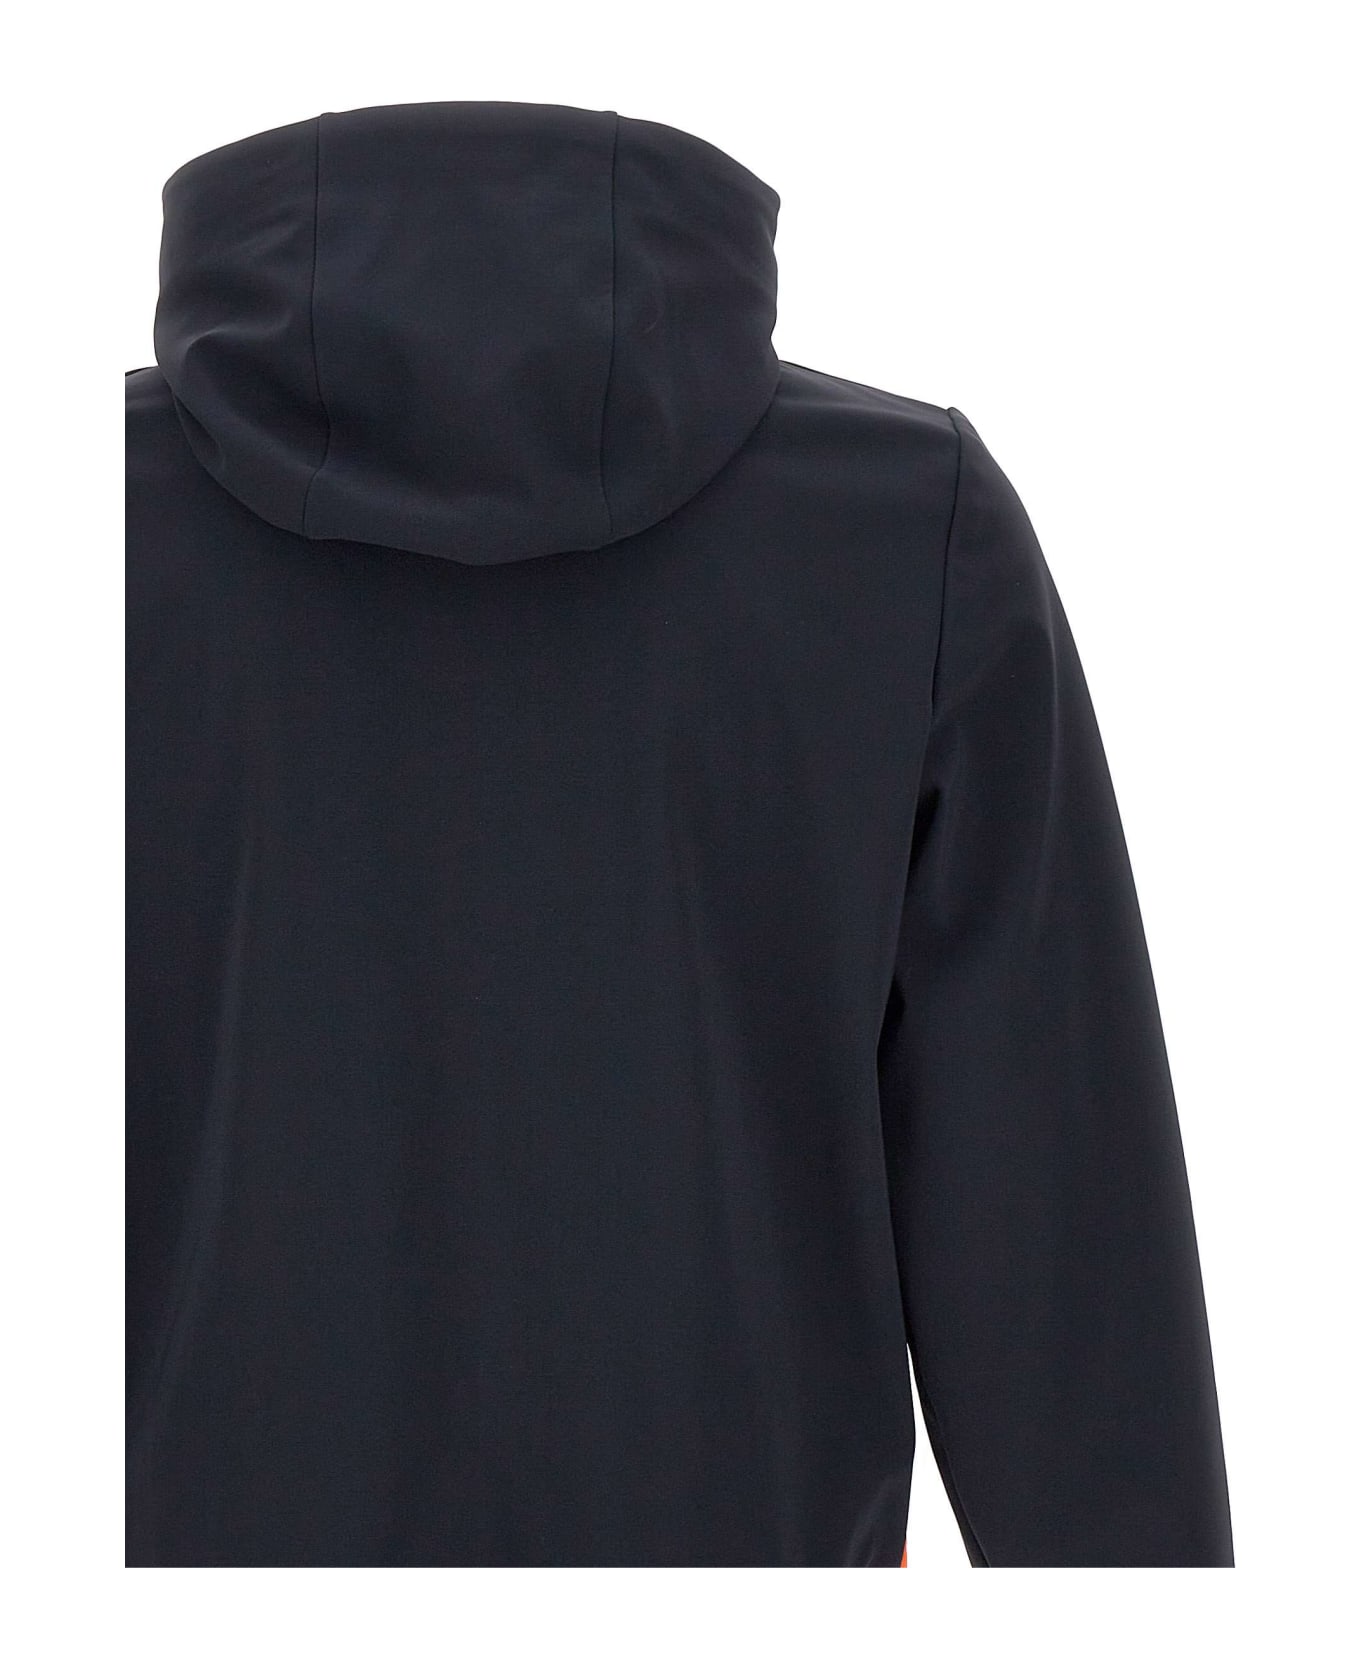 RRD - Roberto Ricci Design 'winter Thermo Hood' Jacket Jacket - BLUE BLACK ジャケット